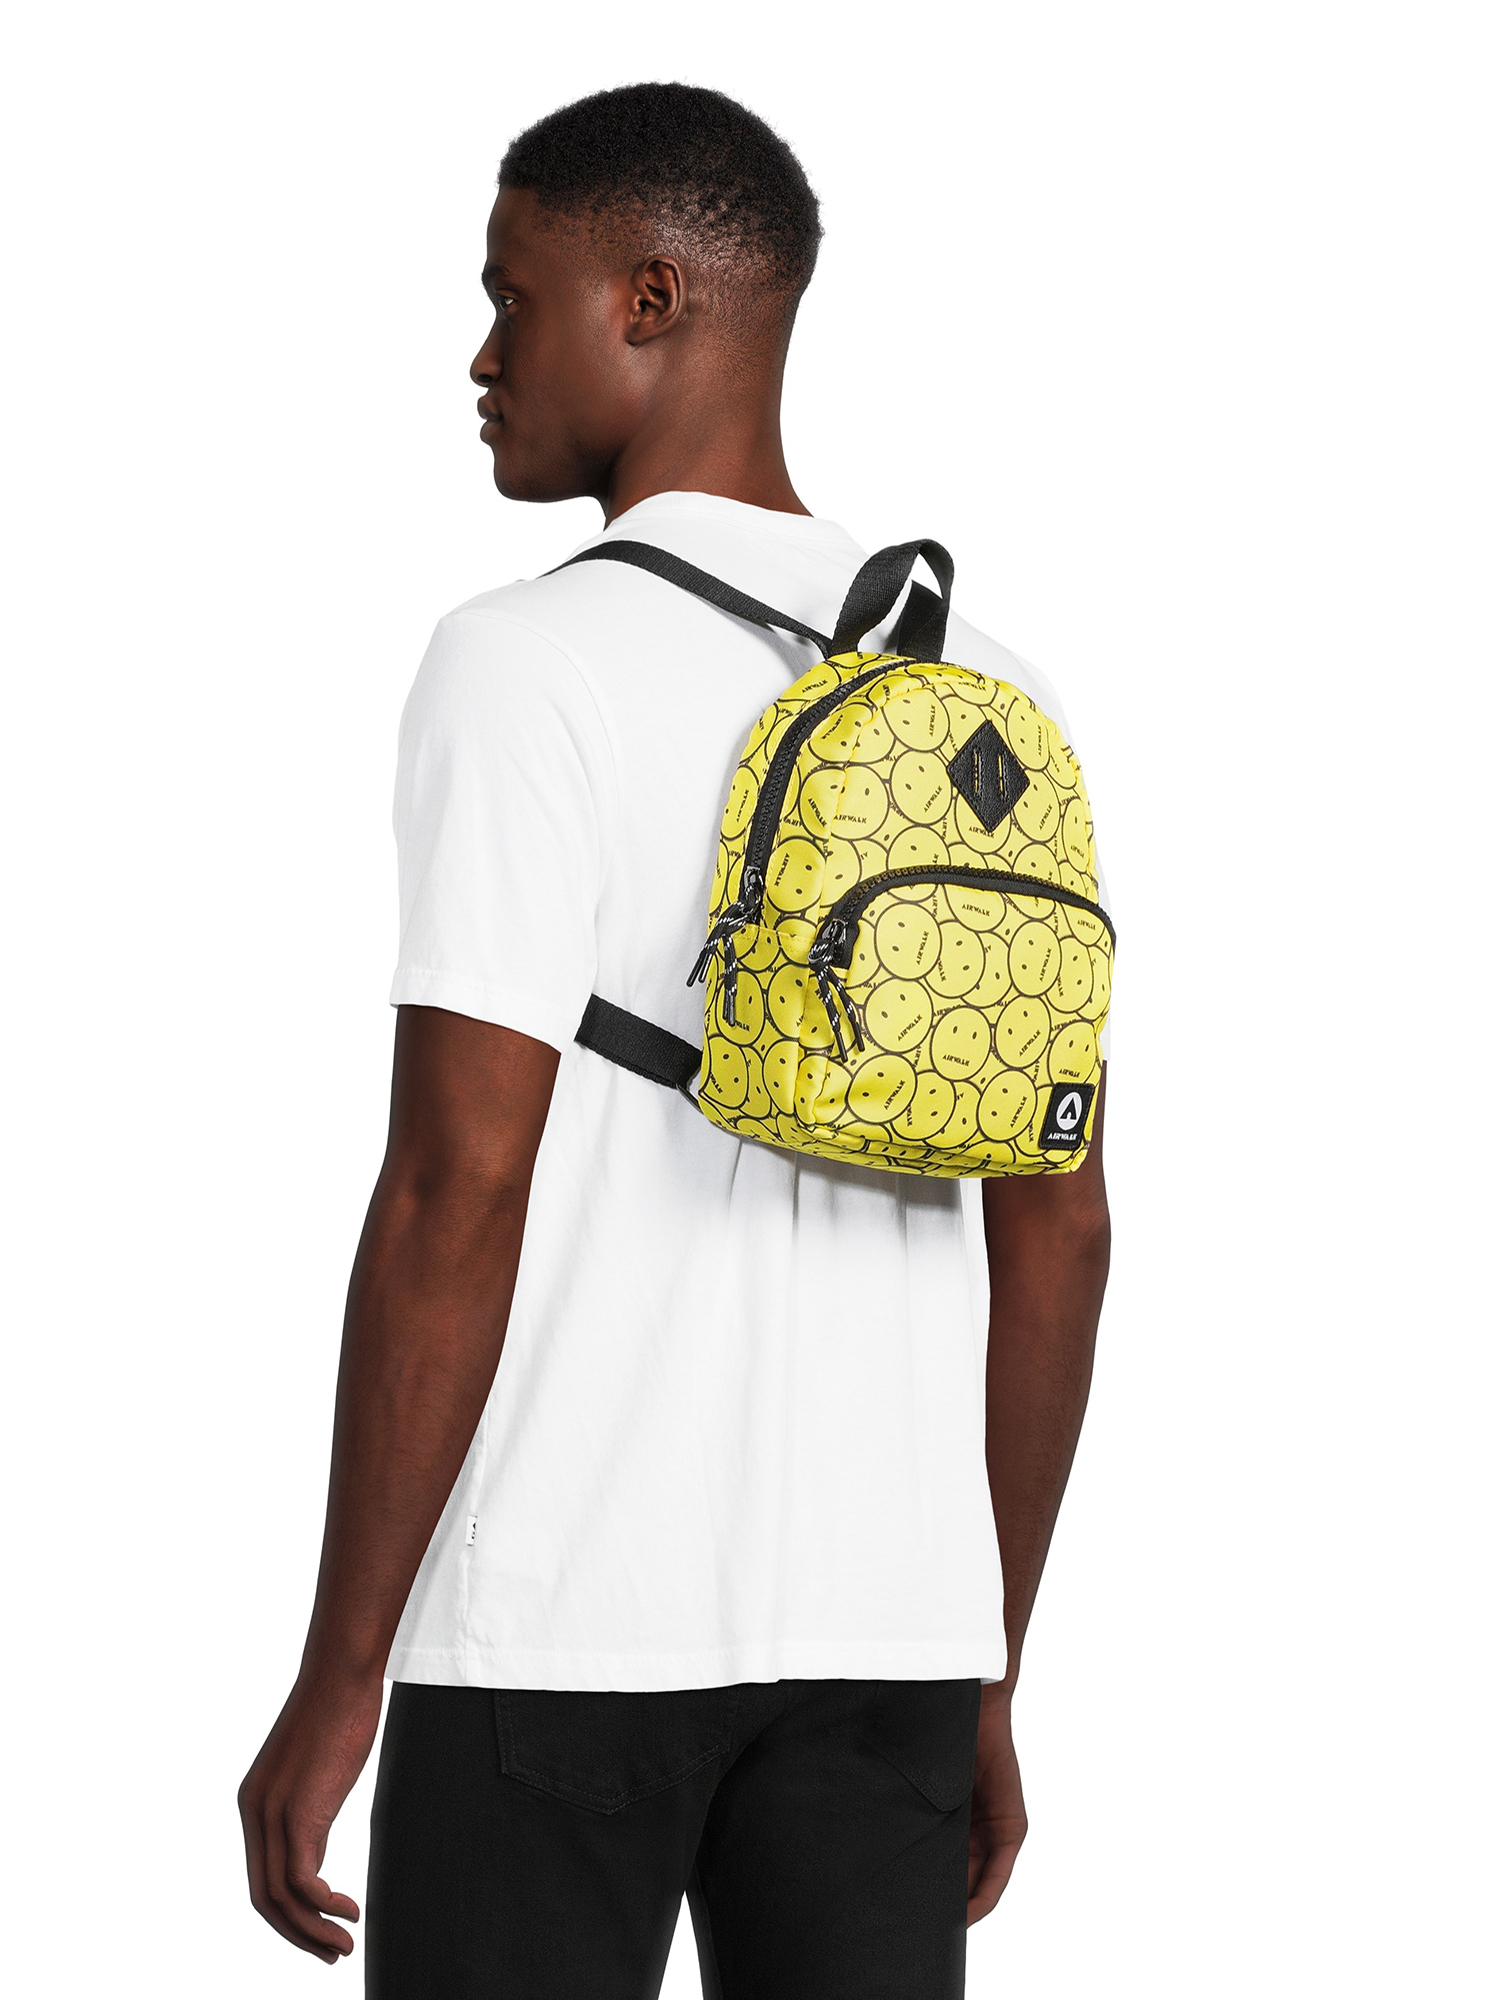 Airwalk Unisex Mini 10" Backpack, Smiley Yellow - image 3 of 6